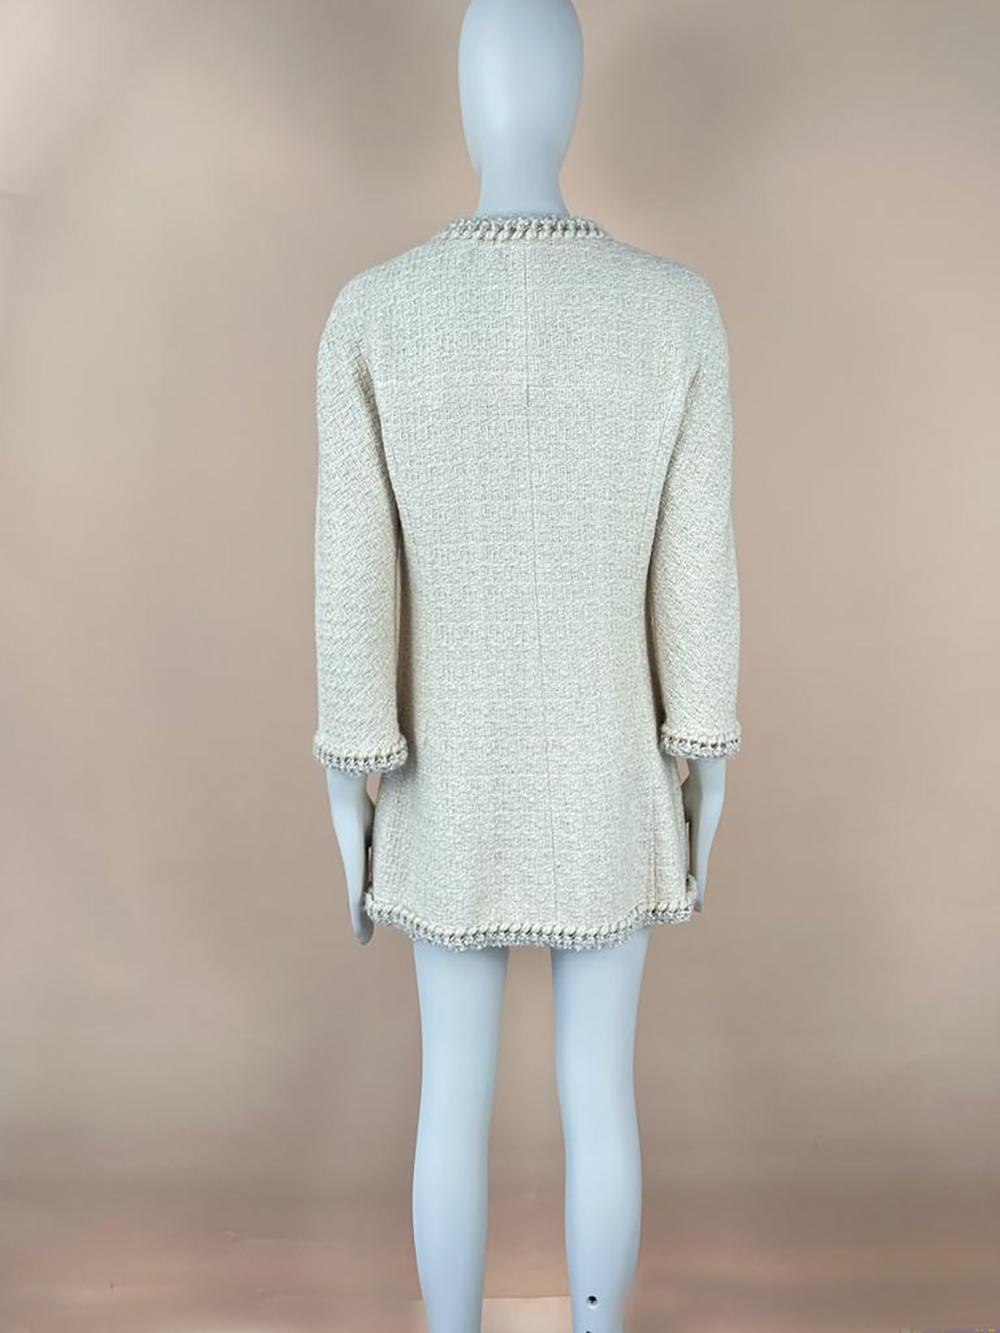 Chanel Iconic 4-Pockets Chain Trim Tweed Jacket Dress 14